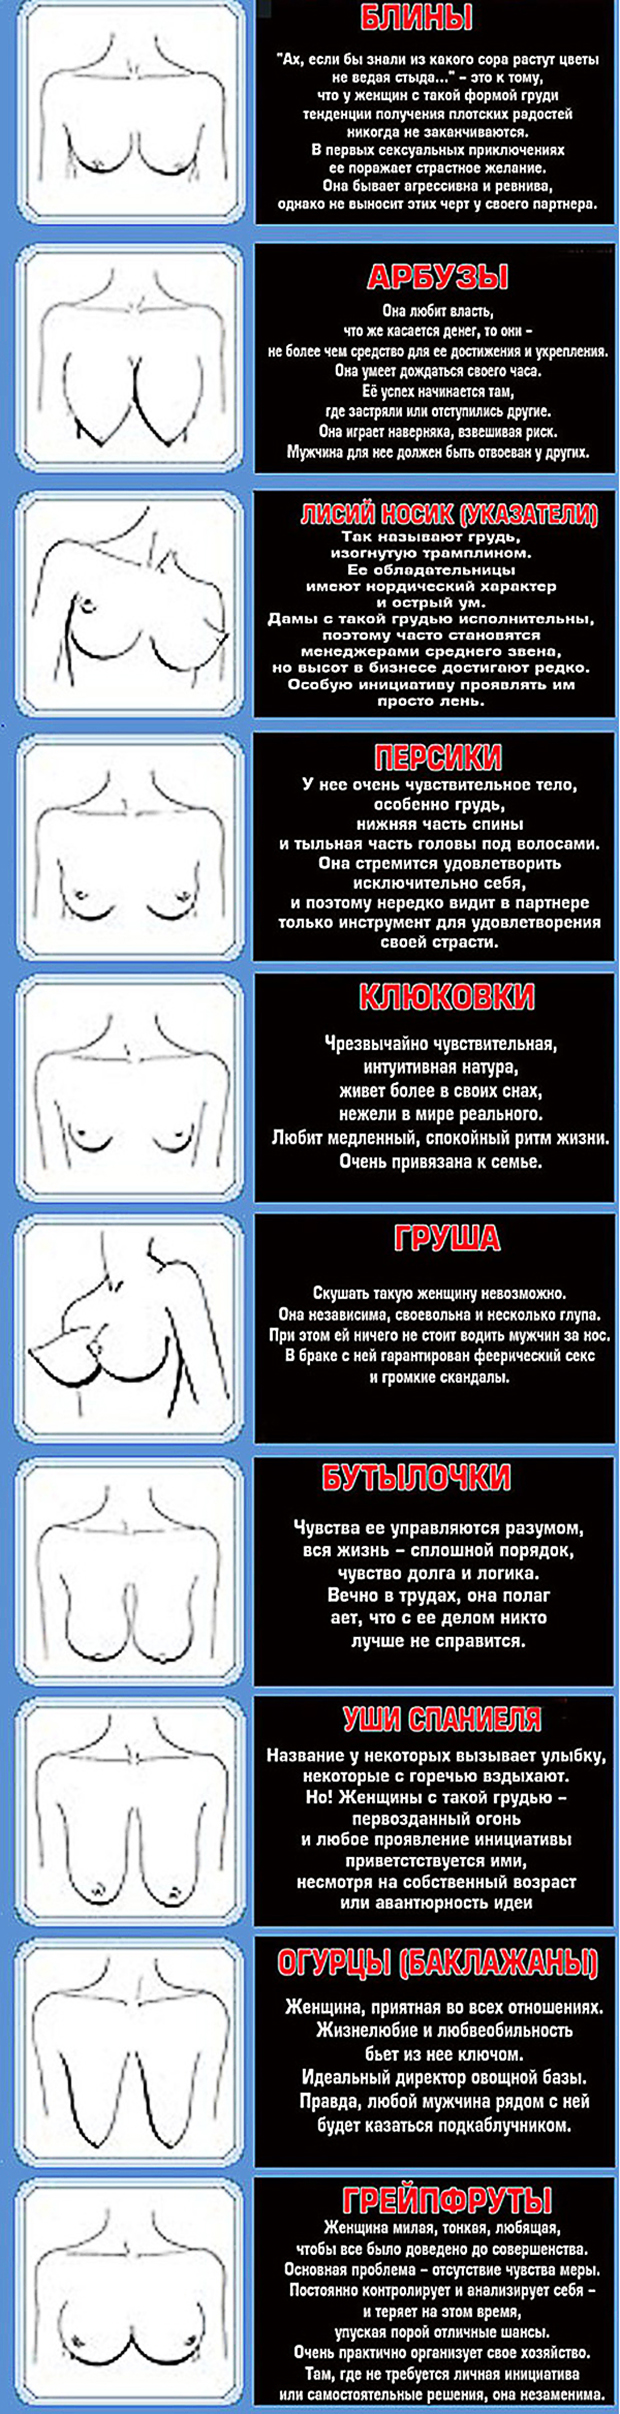 характеристика по женской груди фото 26